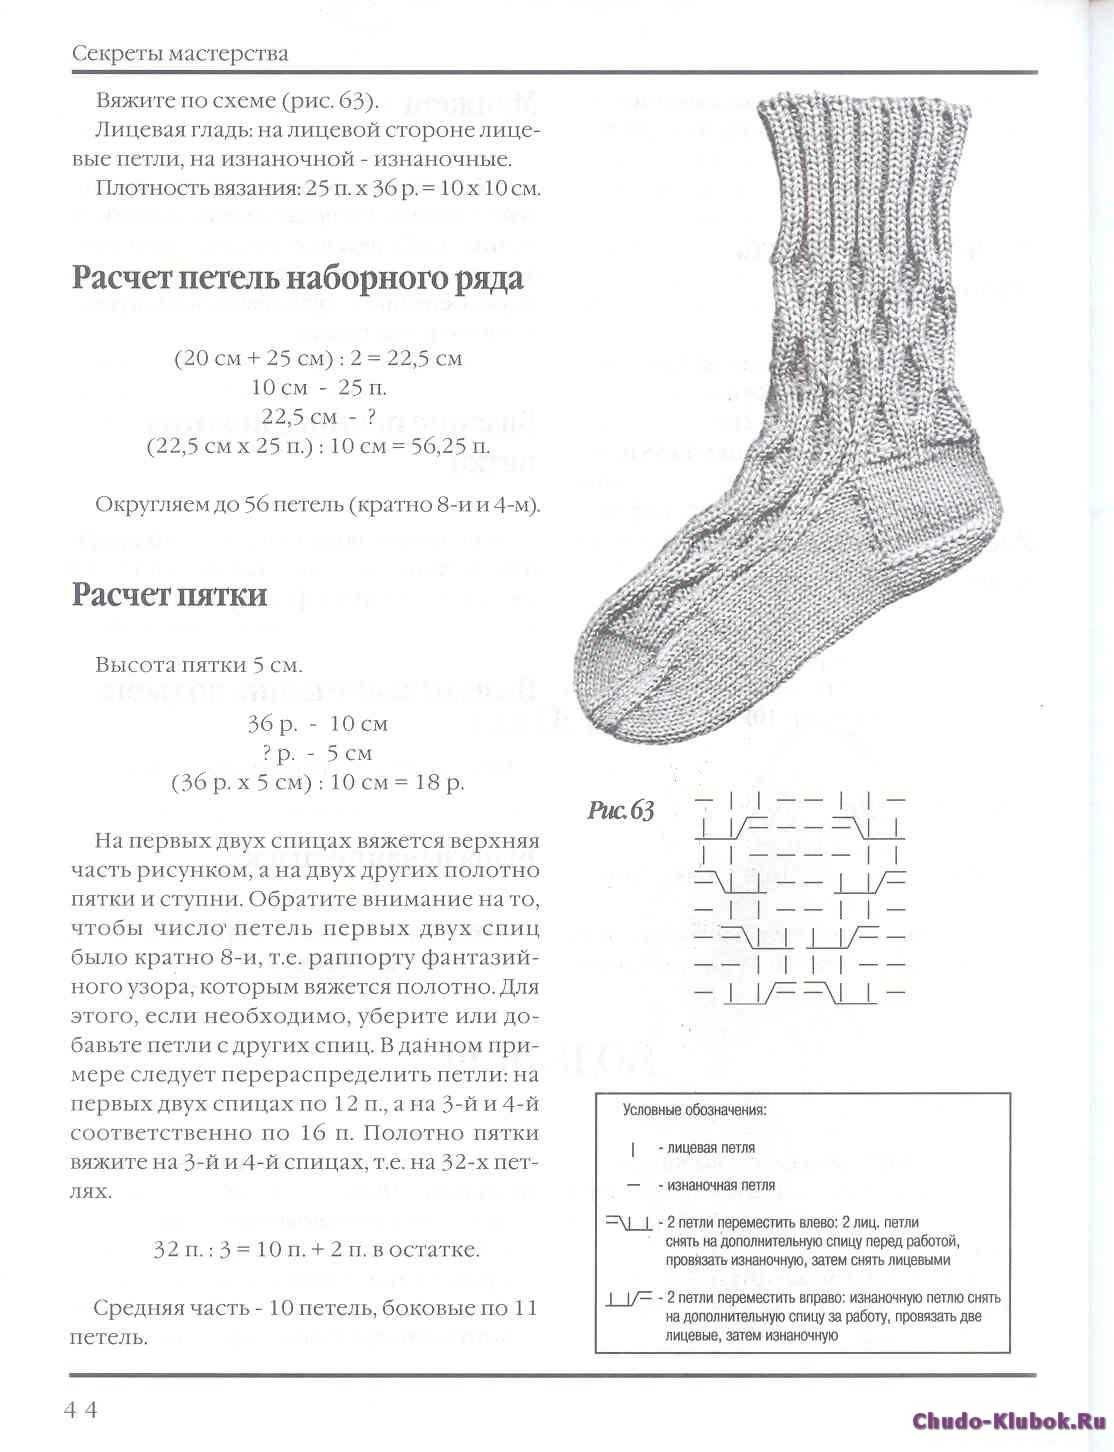 Вяжем спицами носки с описанием